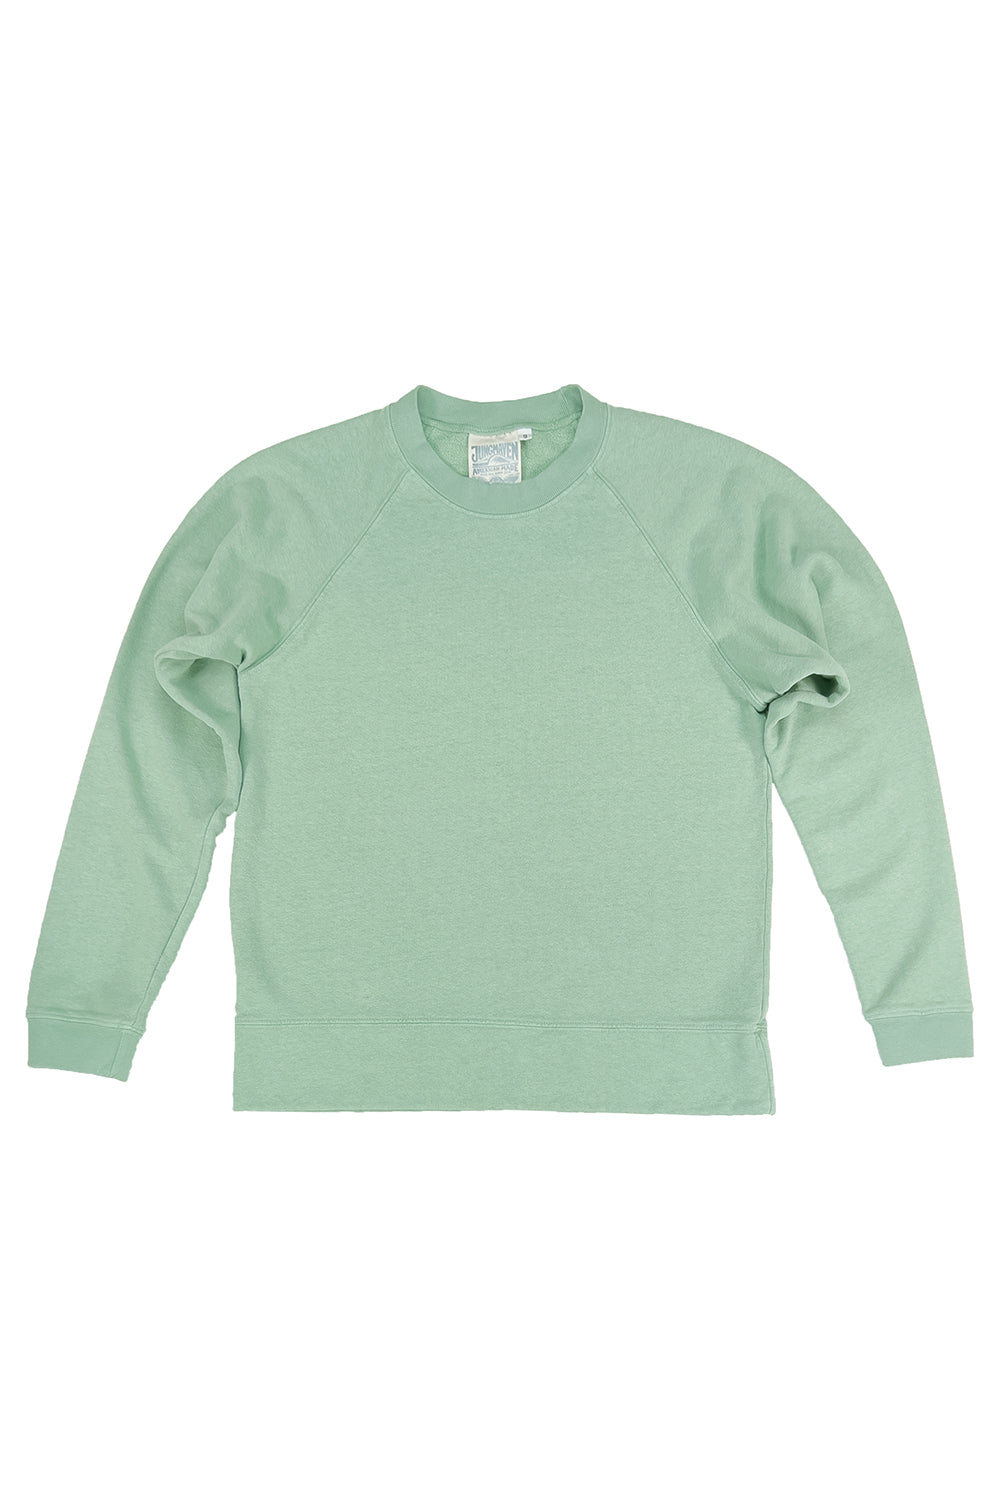 Sierra Raglan Sweatshirt | Jungmaven Hemp Clothing & Accessories / Color: Sage Green